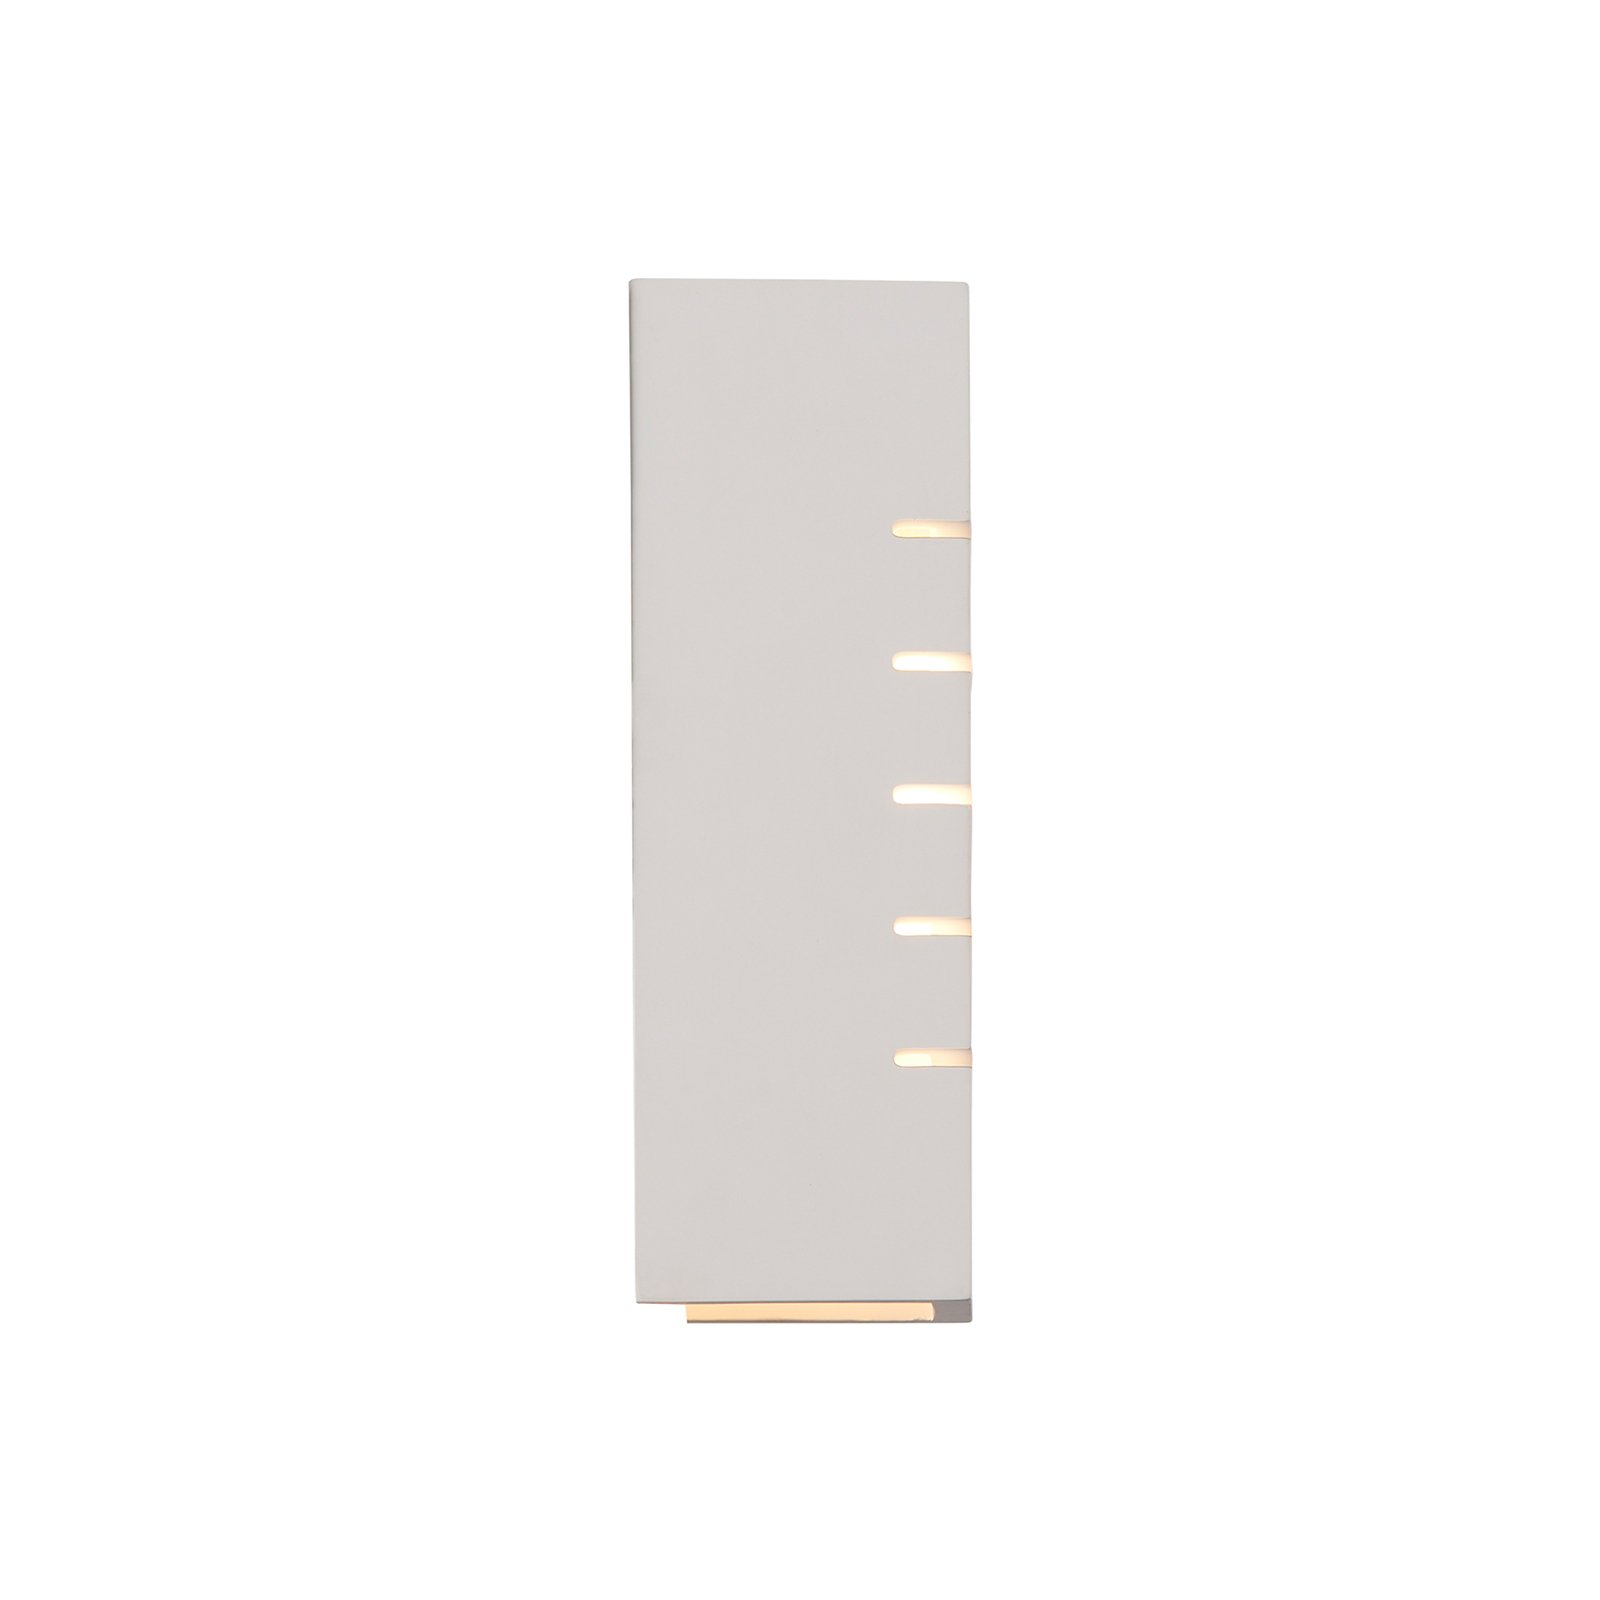 Lancio Kvadrātveida sienas lampas no ģipša, ar kontaktdakšu, baltas krāsas